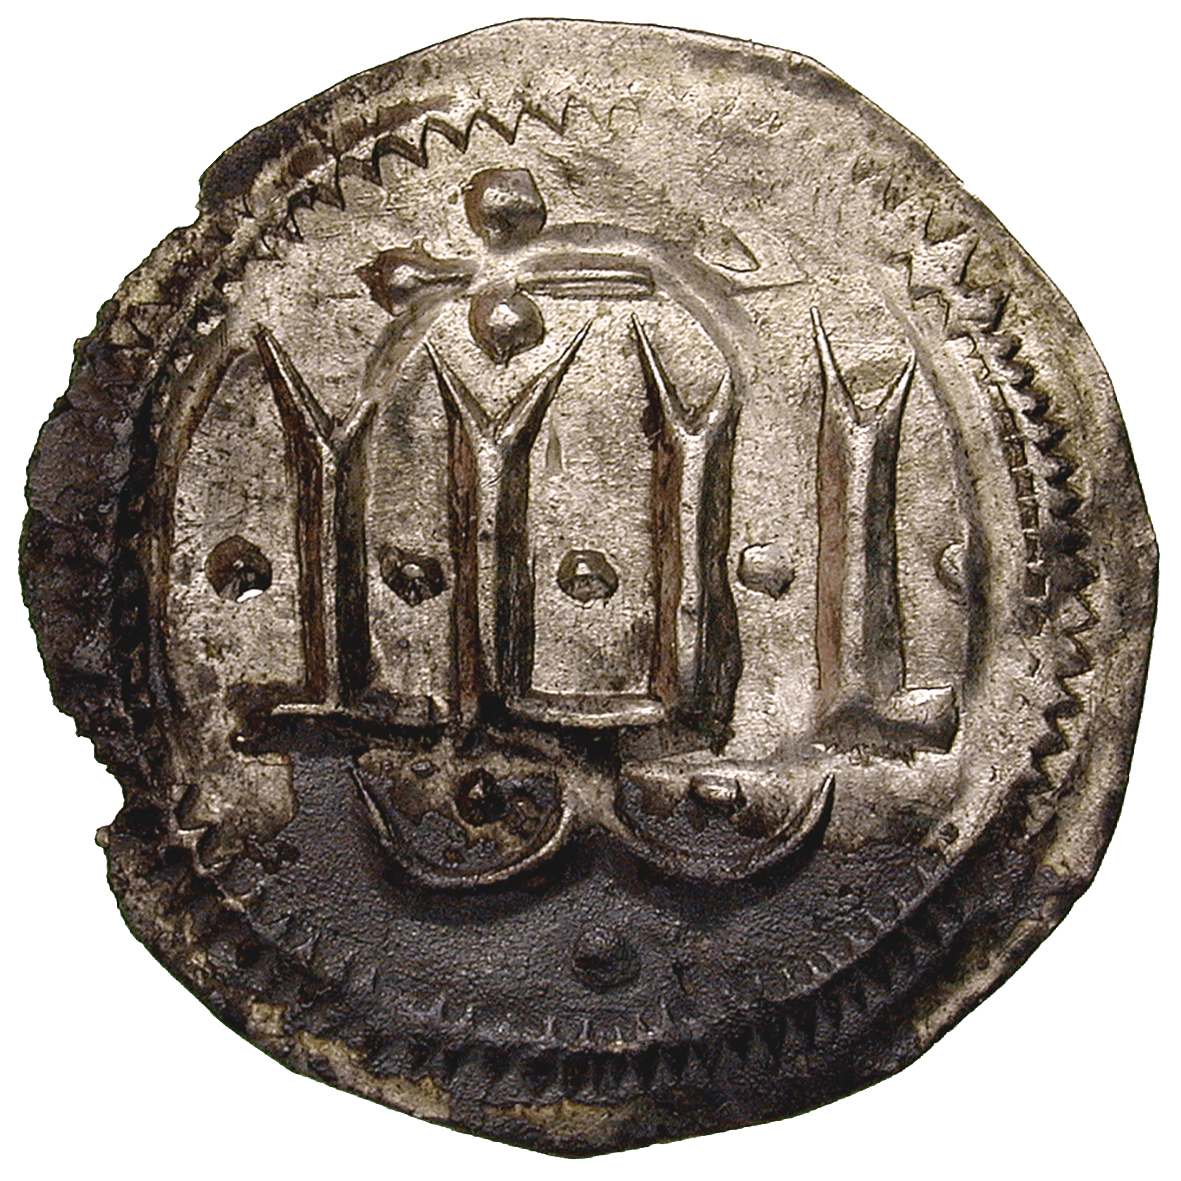 Kingdom of Denmark, Harald I Bluetooth, Denarius (obverse)